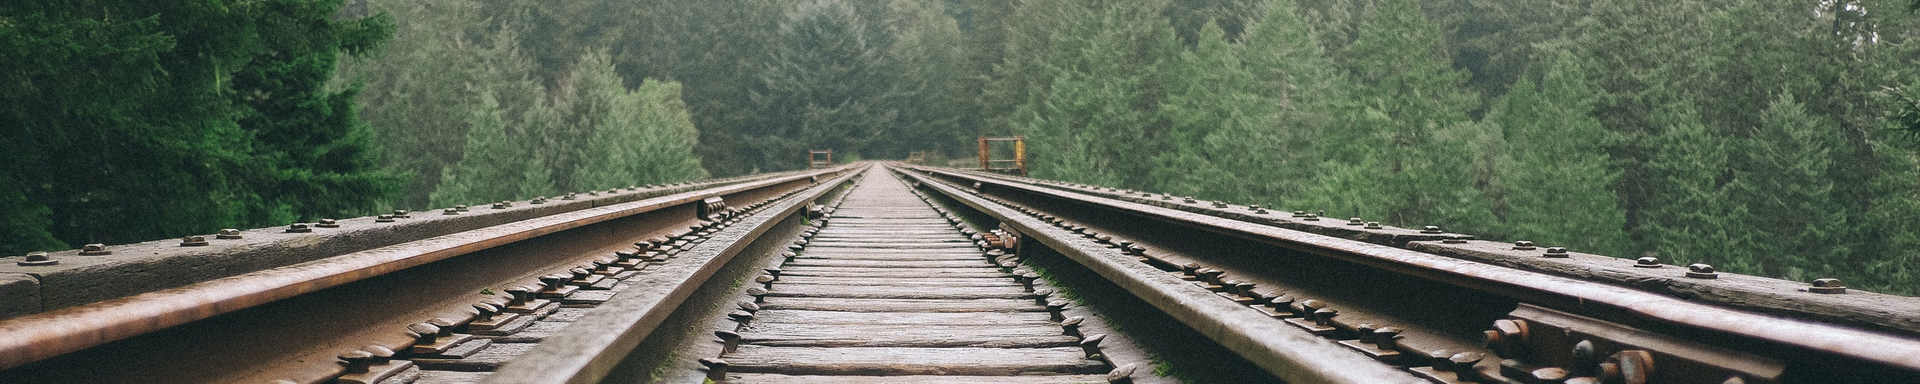 Green forest train tracks